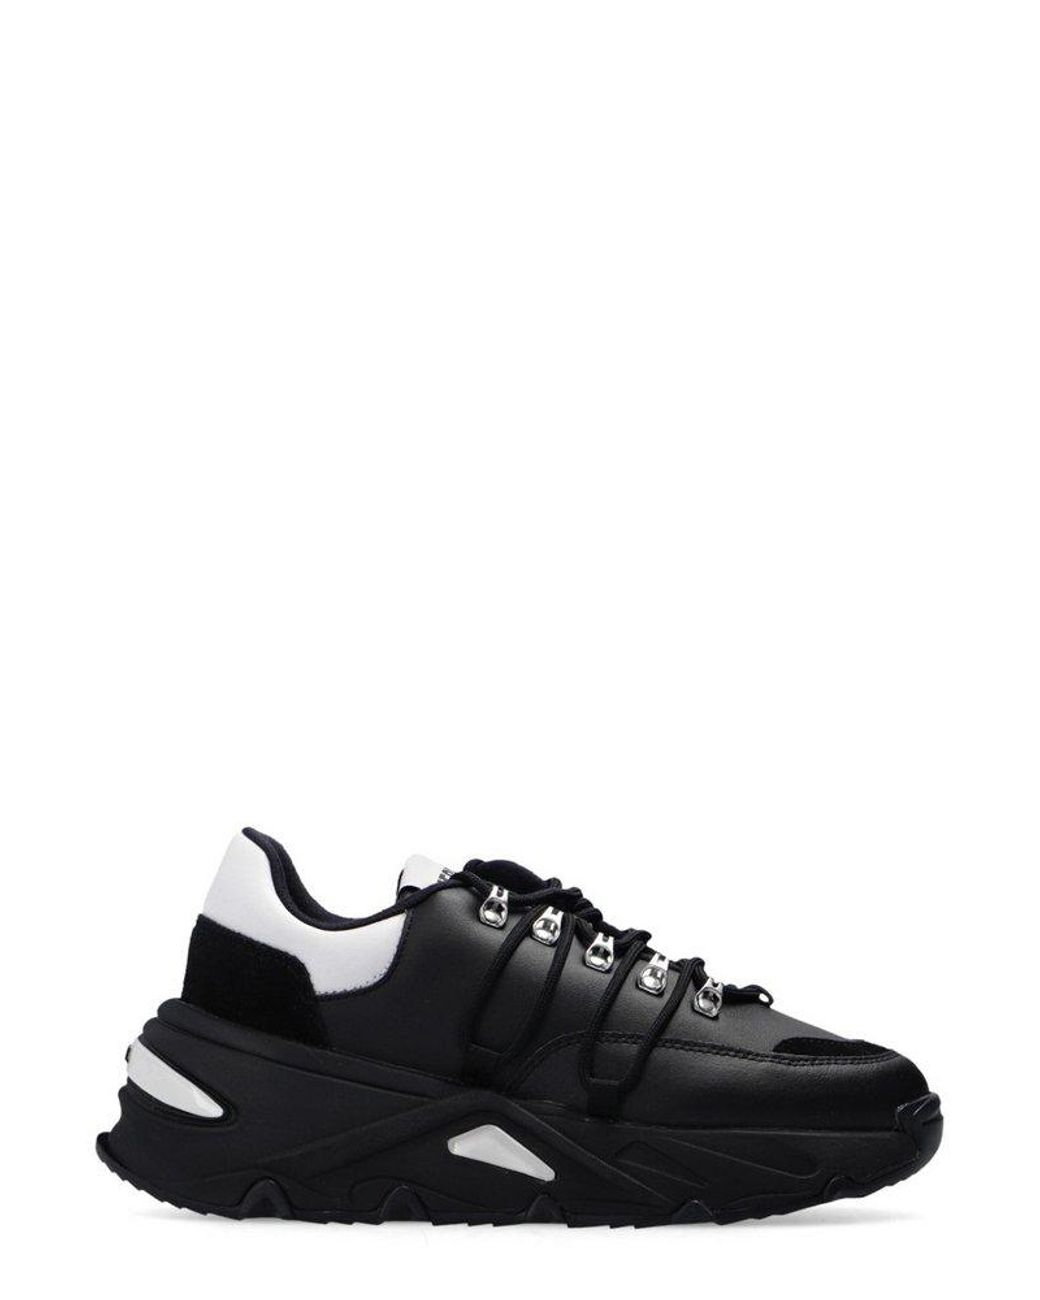 DIESEL S-herby Round Toe Laced Sneakers in Black | Lyst